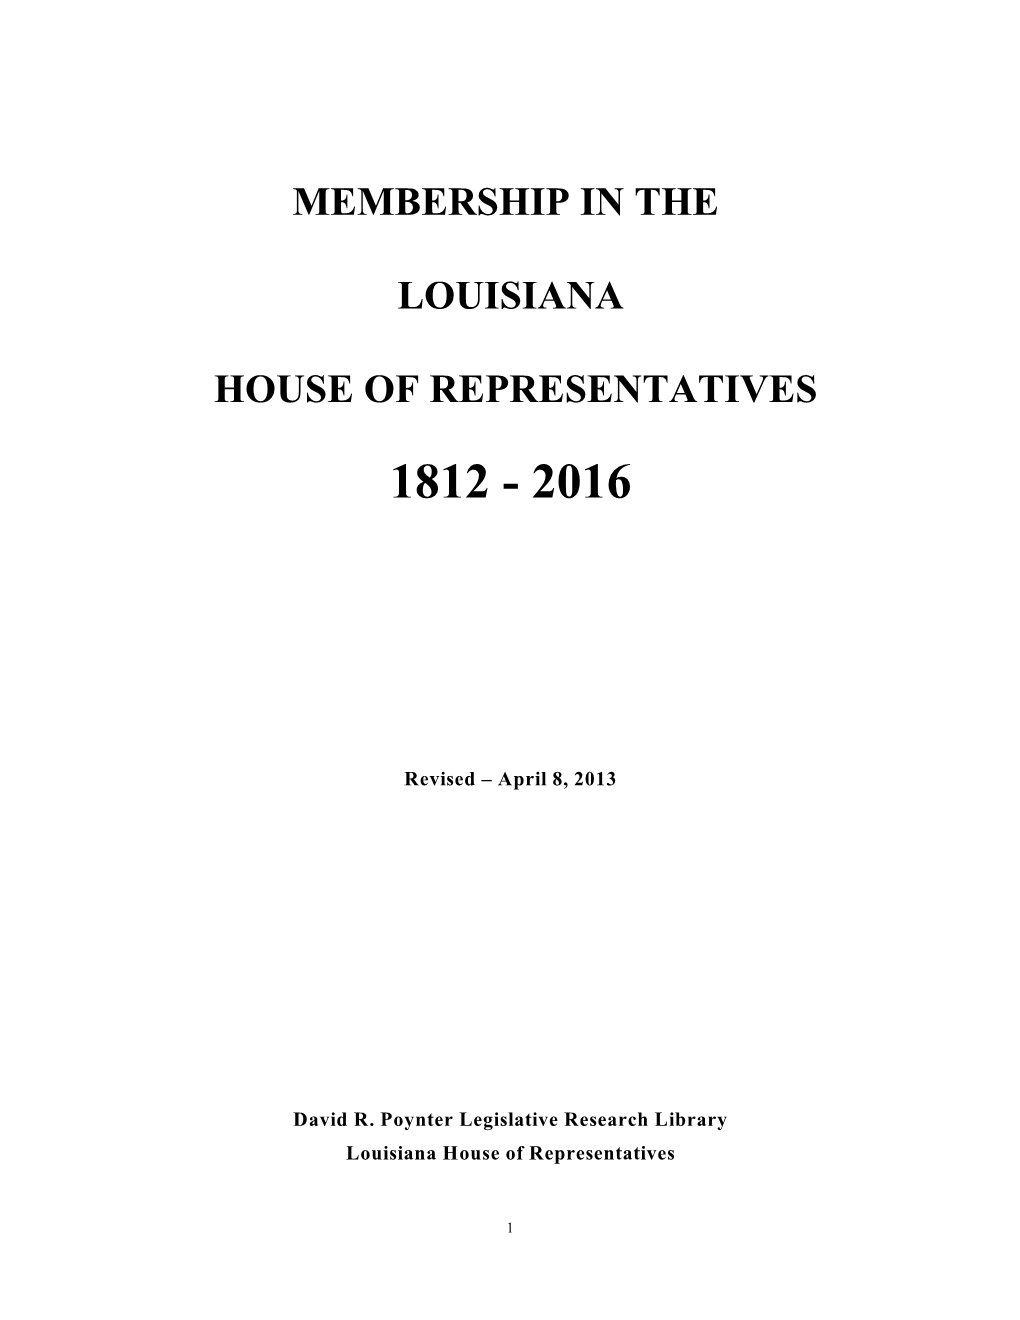 Membership in the Louisiana House of Representatives